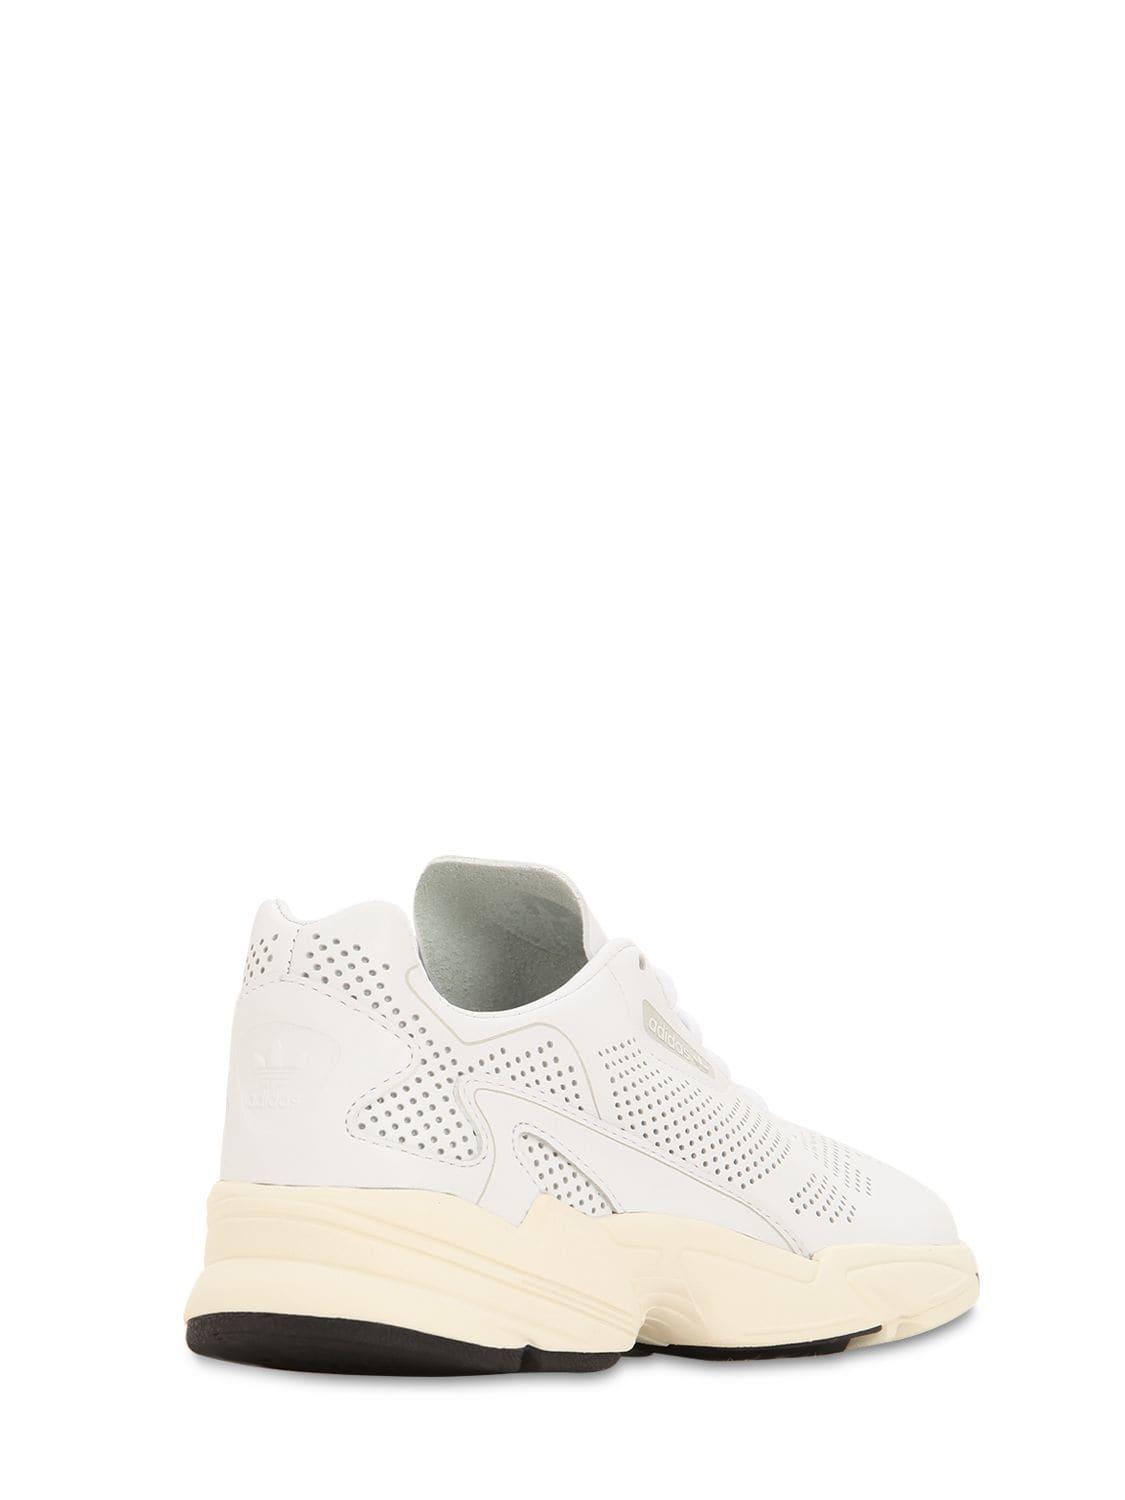 adidas Originals Falcon Sneakers in White - Lyst